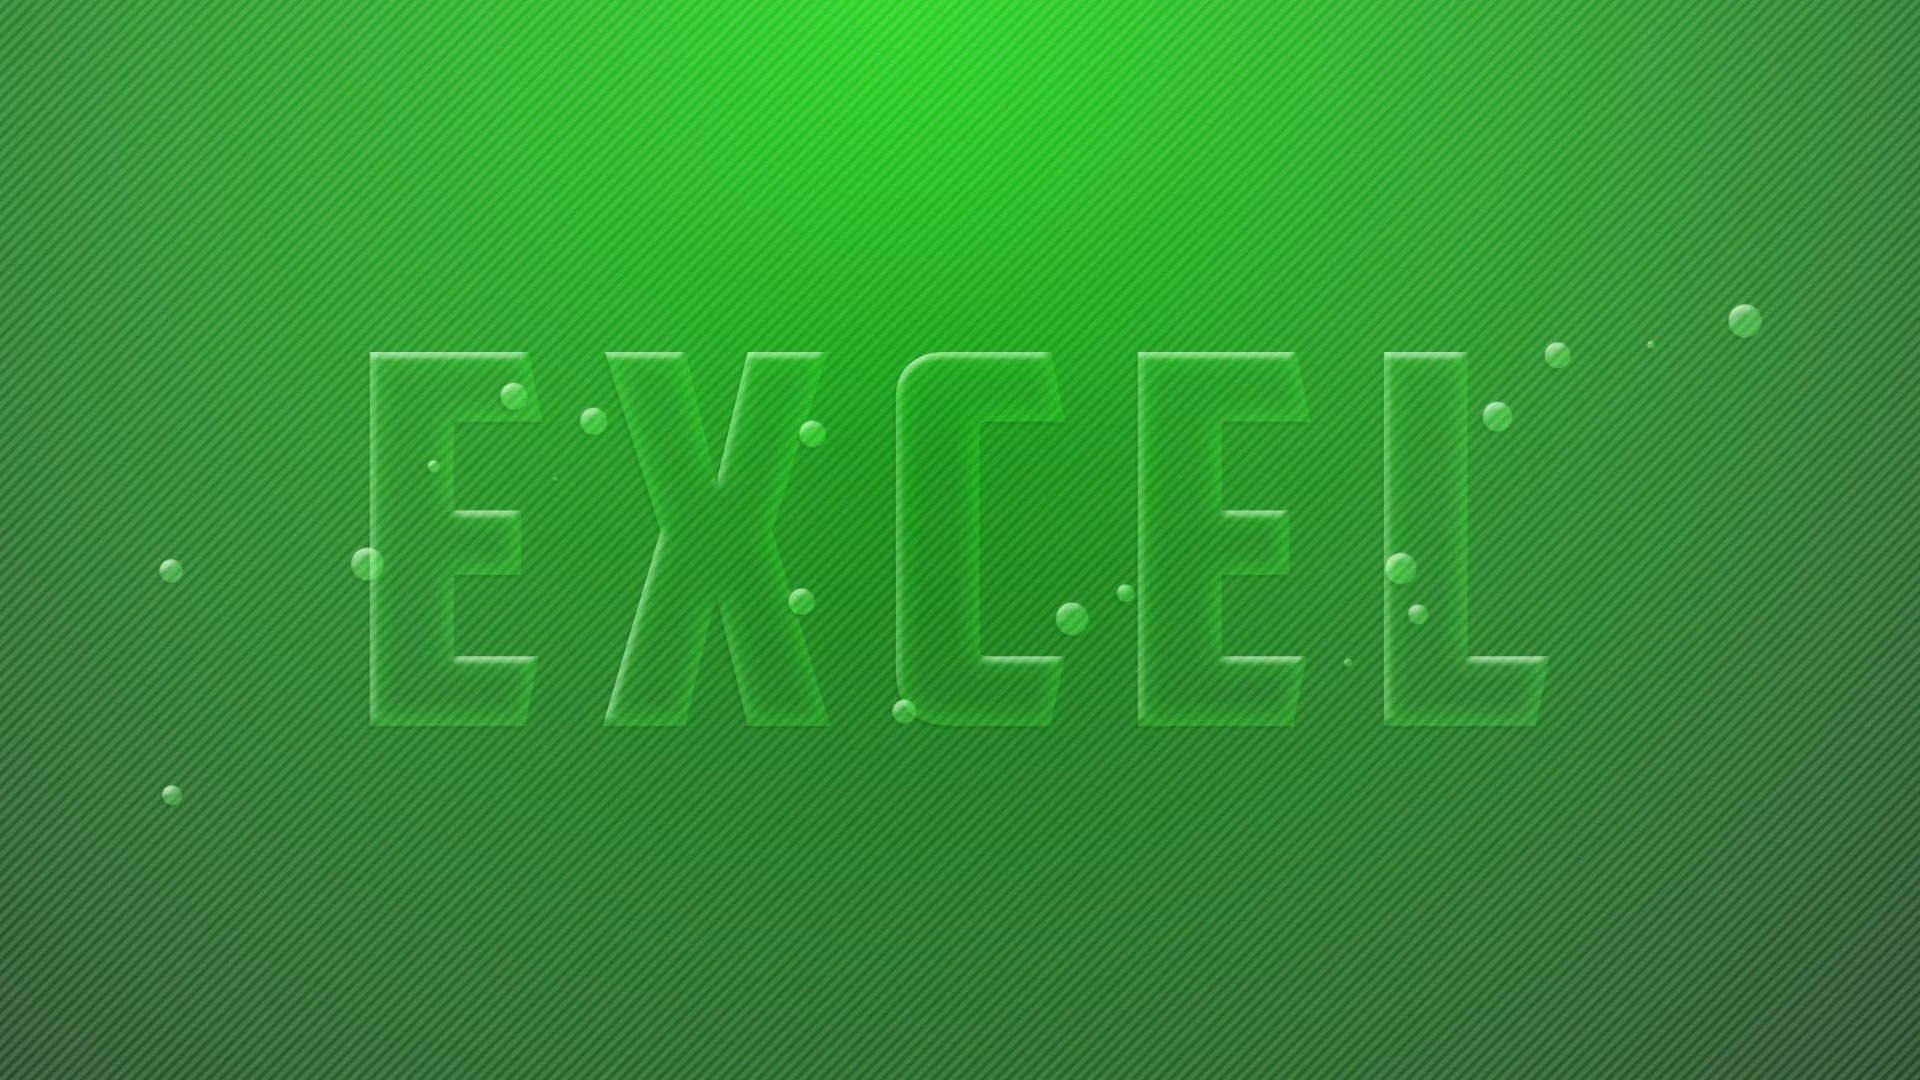 Excel Pictures Wallpaper